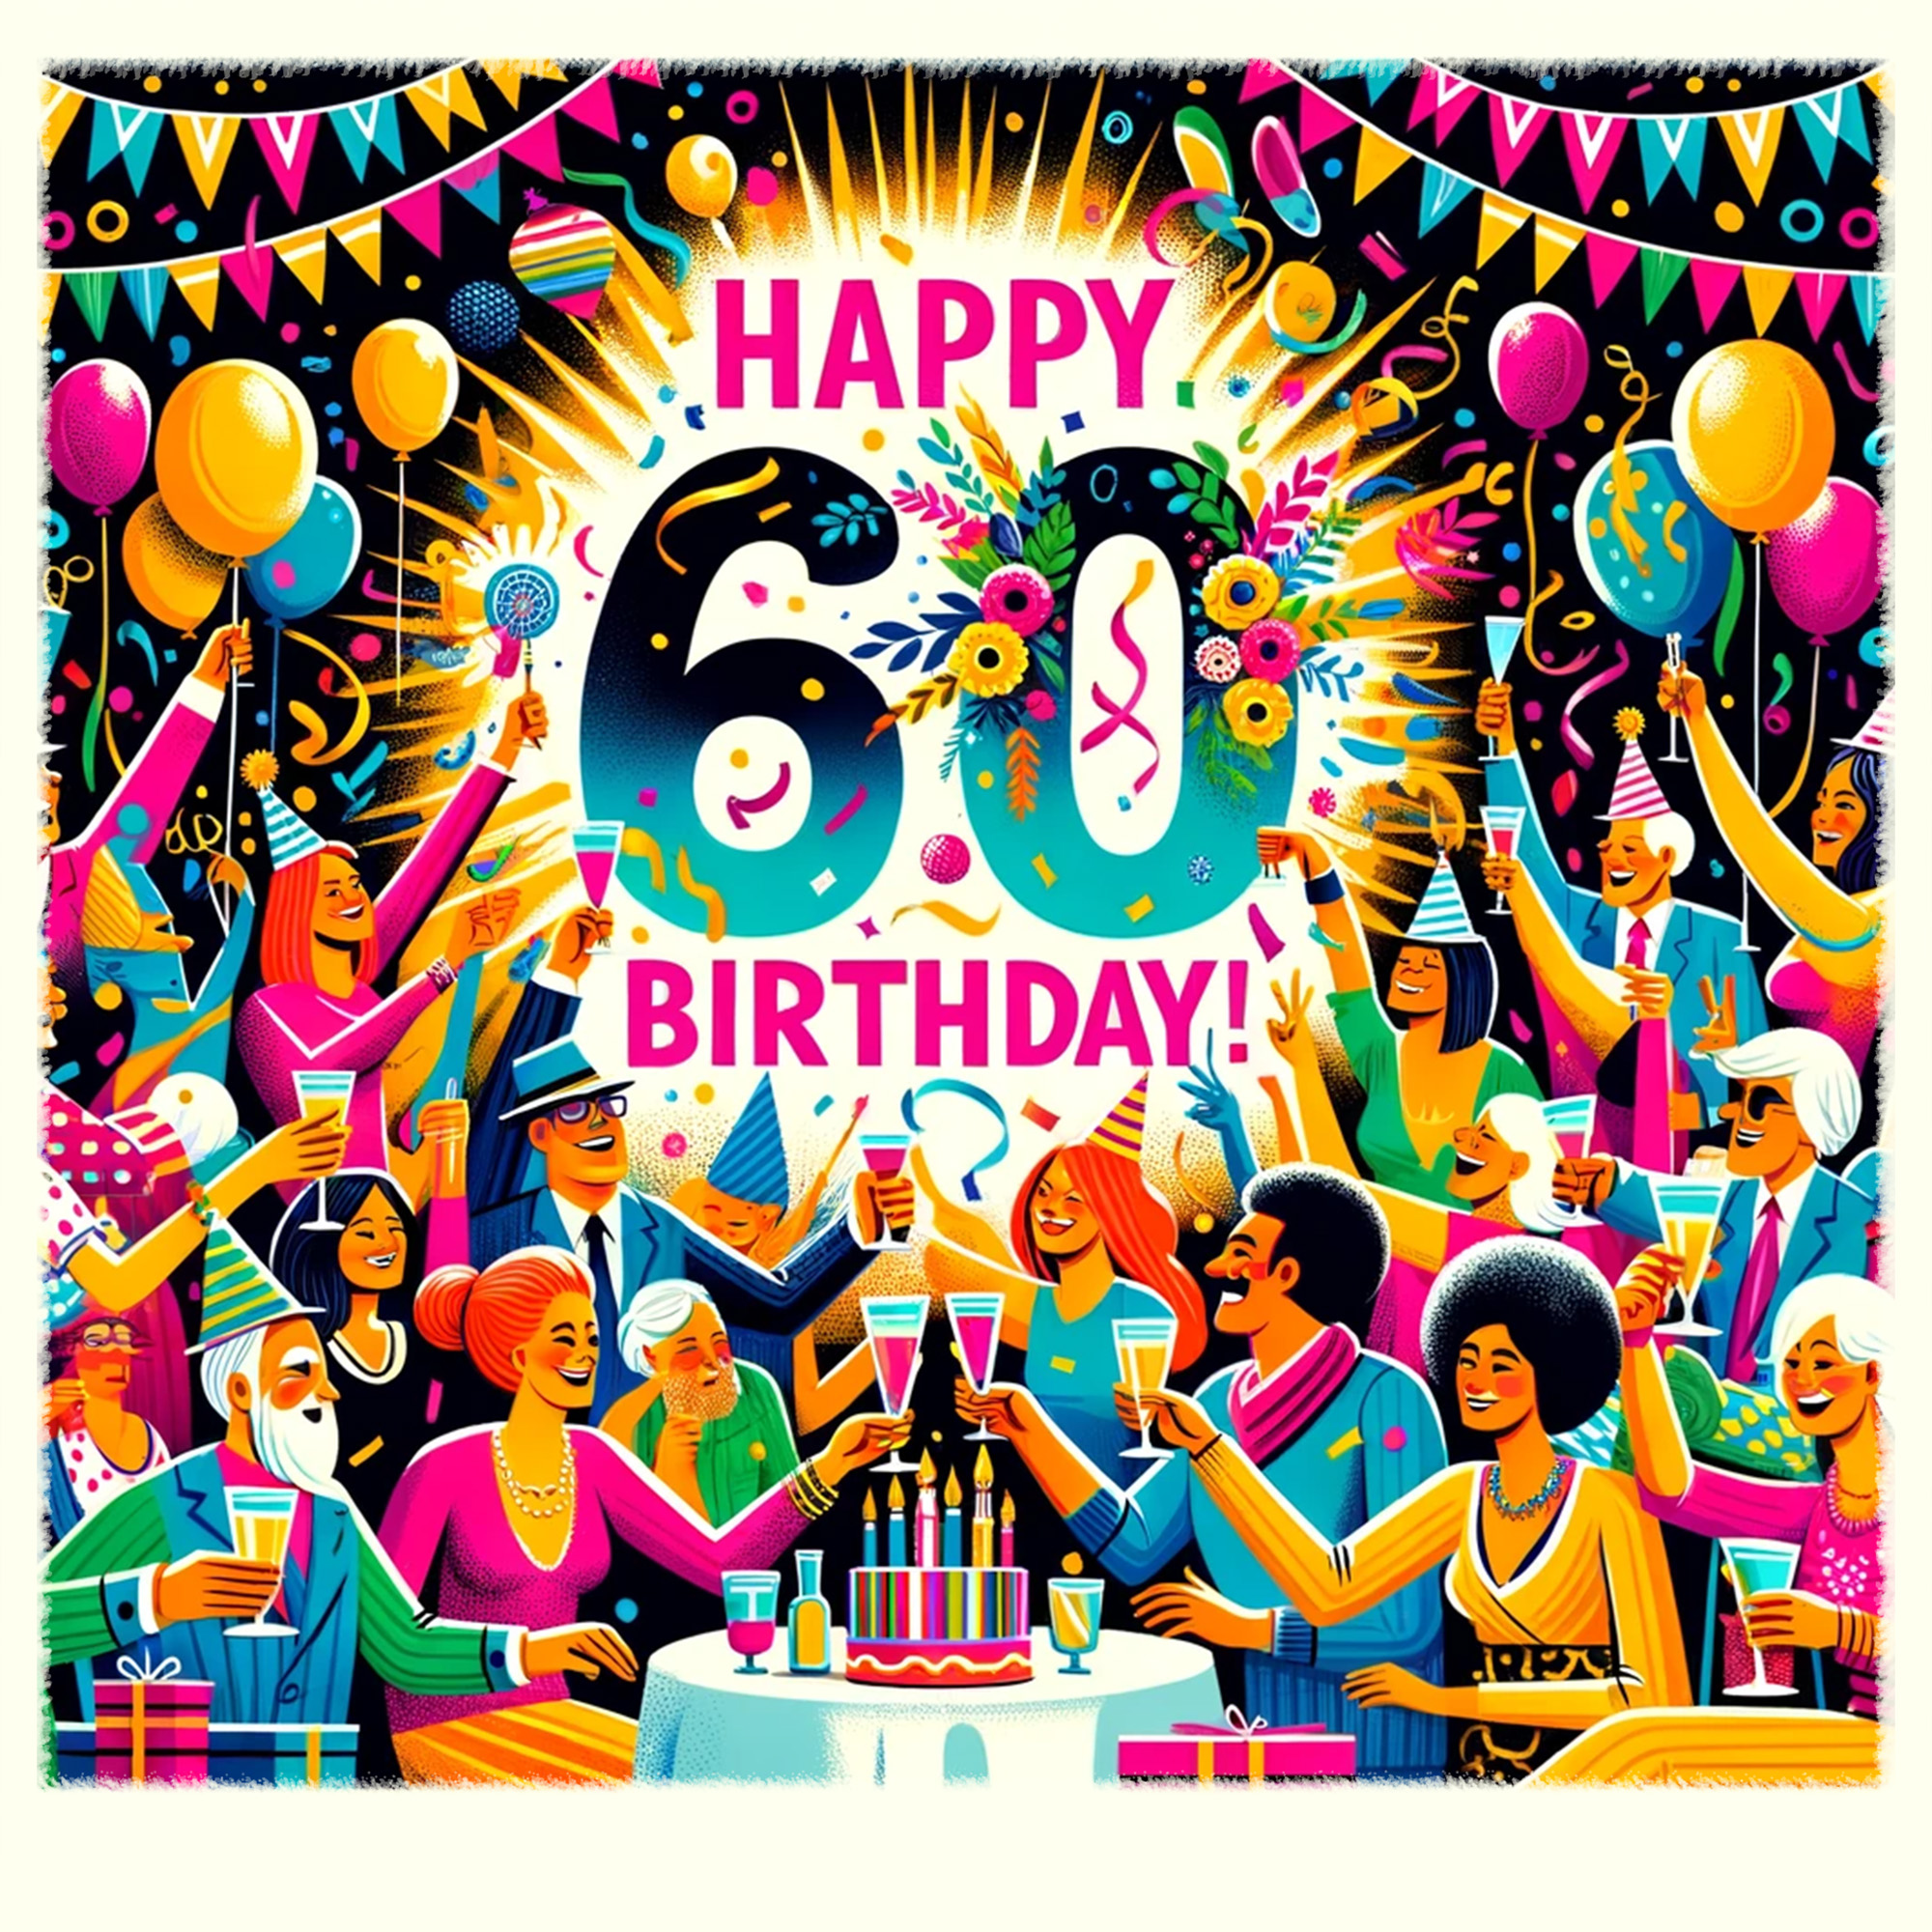 Free Happy Birthday Wishes and Images 60th Years - birthdayimg.com